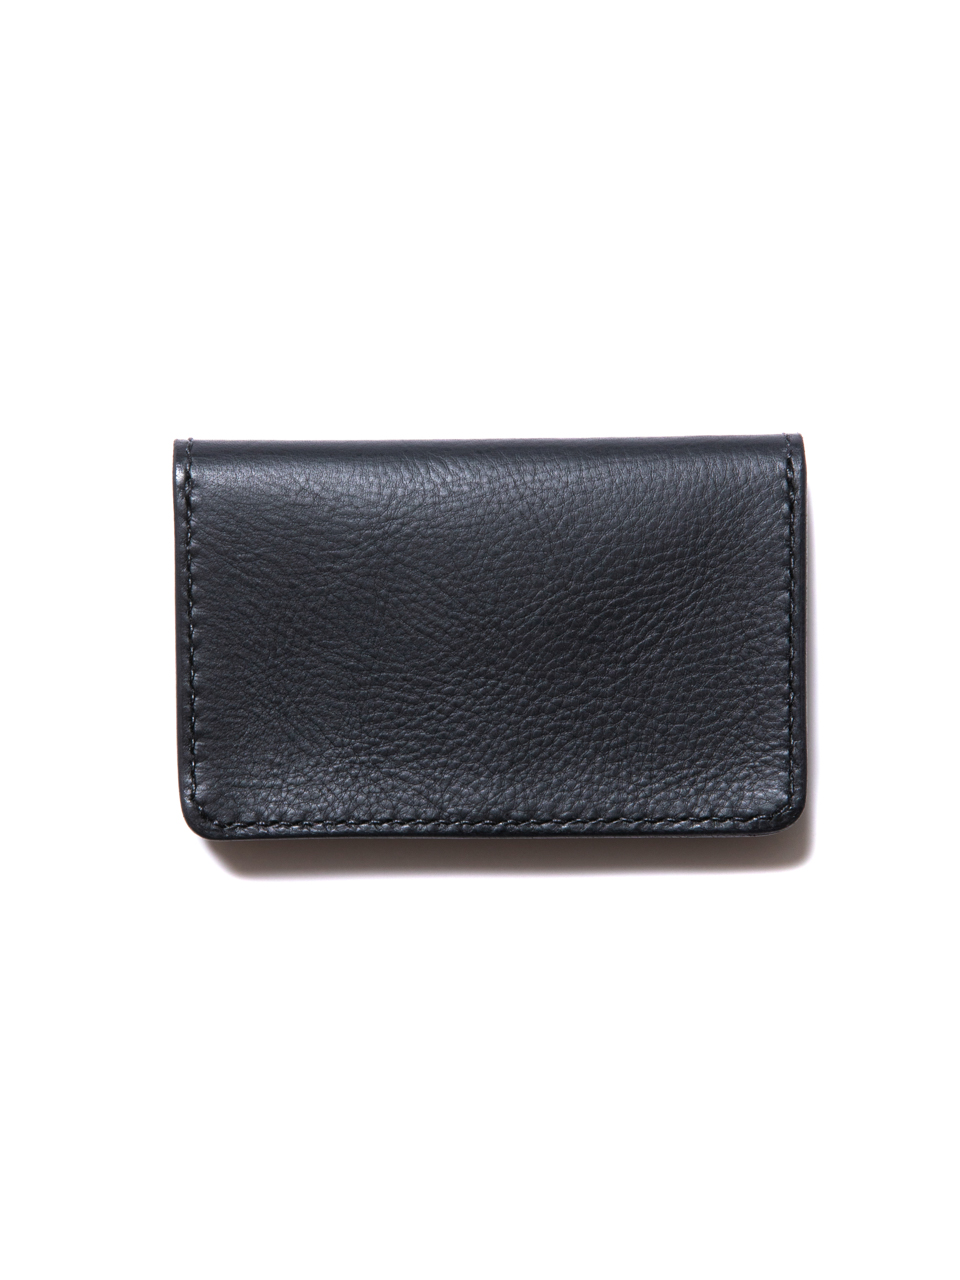 COOTIE Leather Card Case -Black- 80-HACHIMARU-